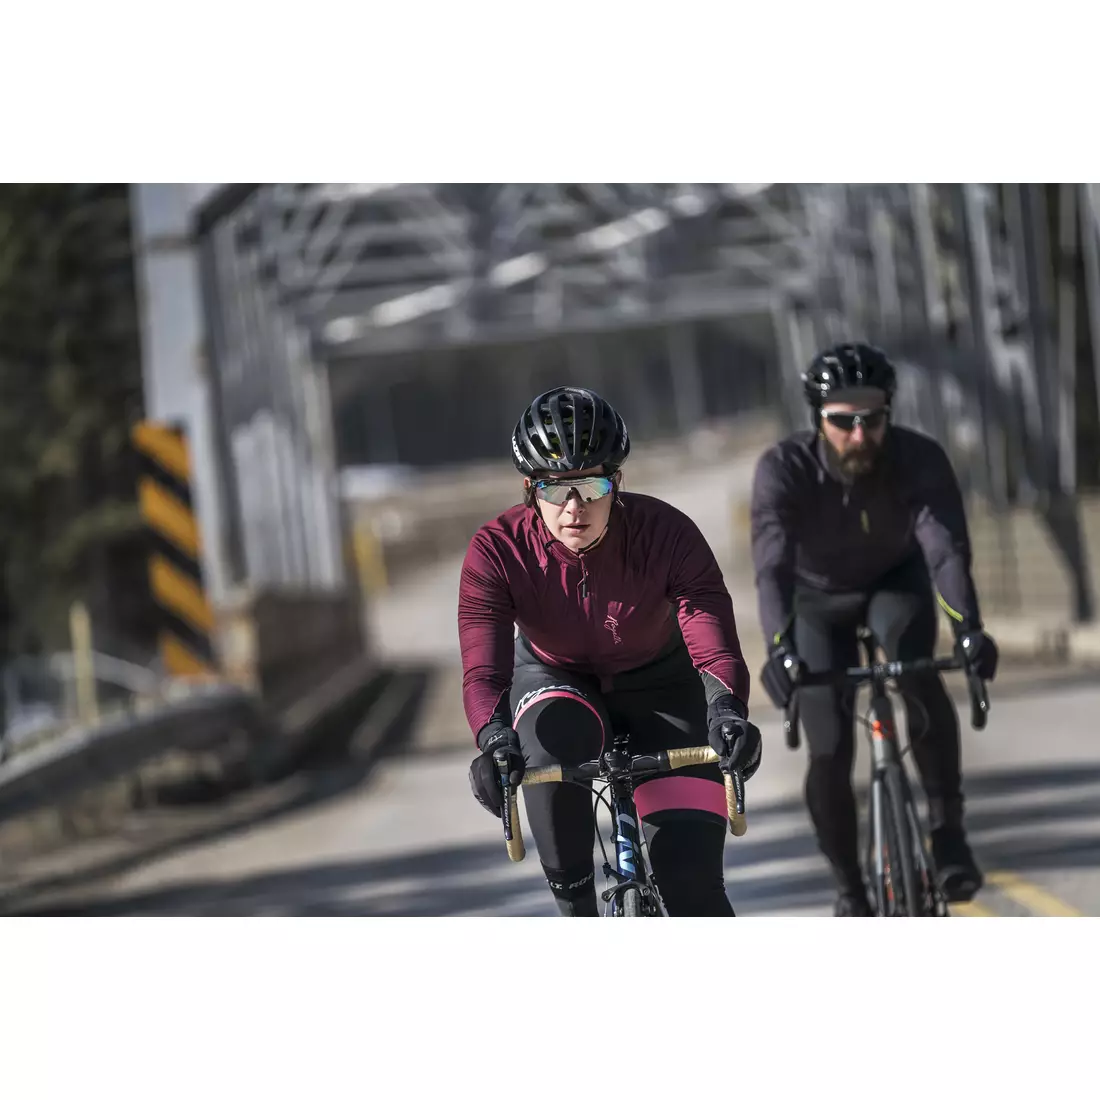 ROGELLI W2 women's softshell uninsulated cycling jacket maroon 010.040 